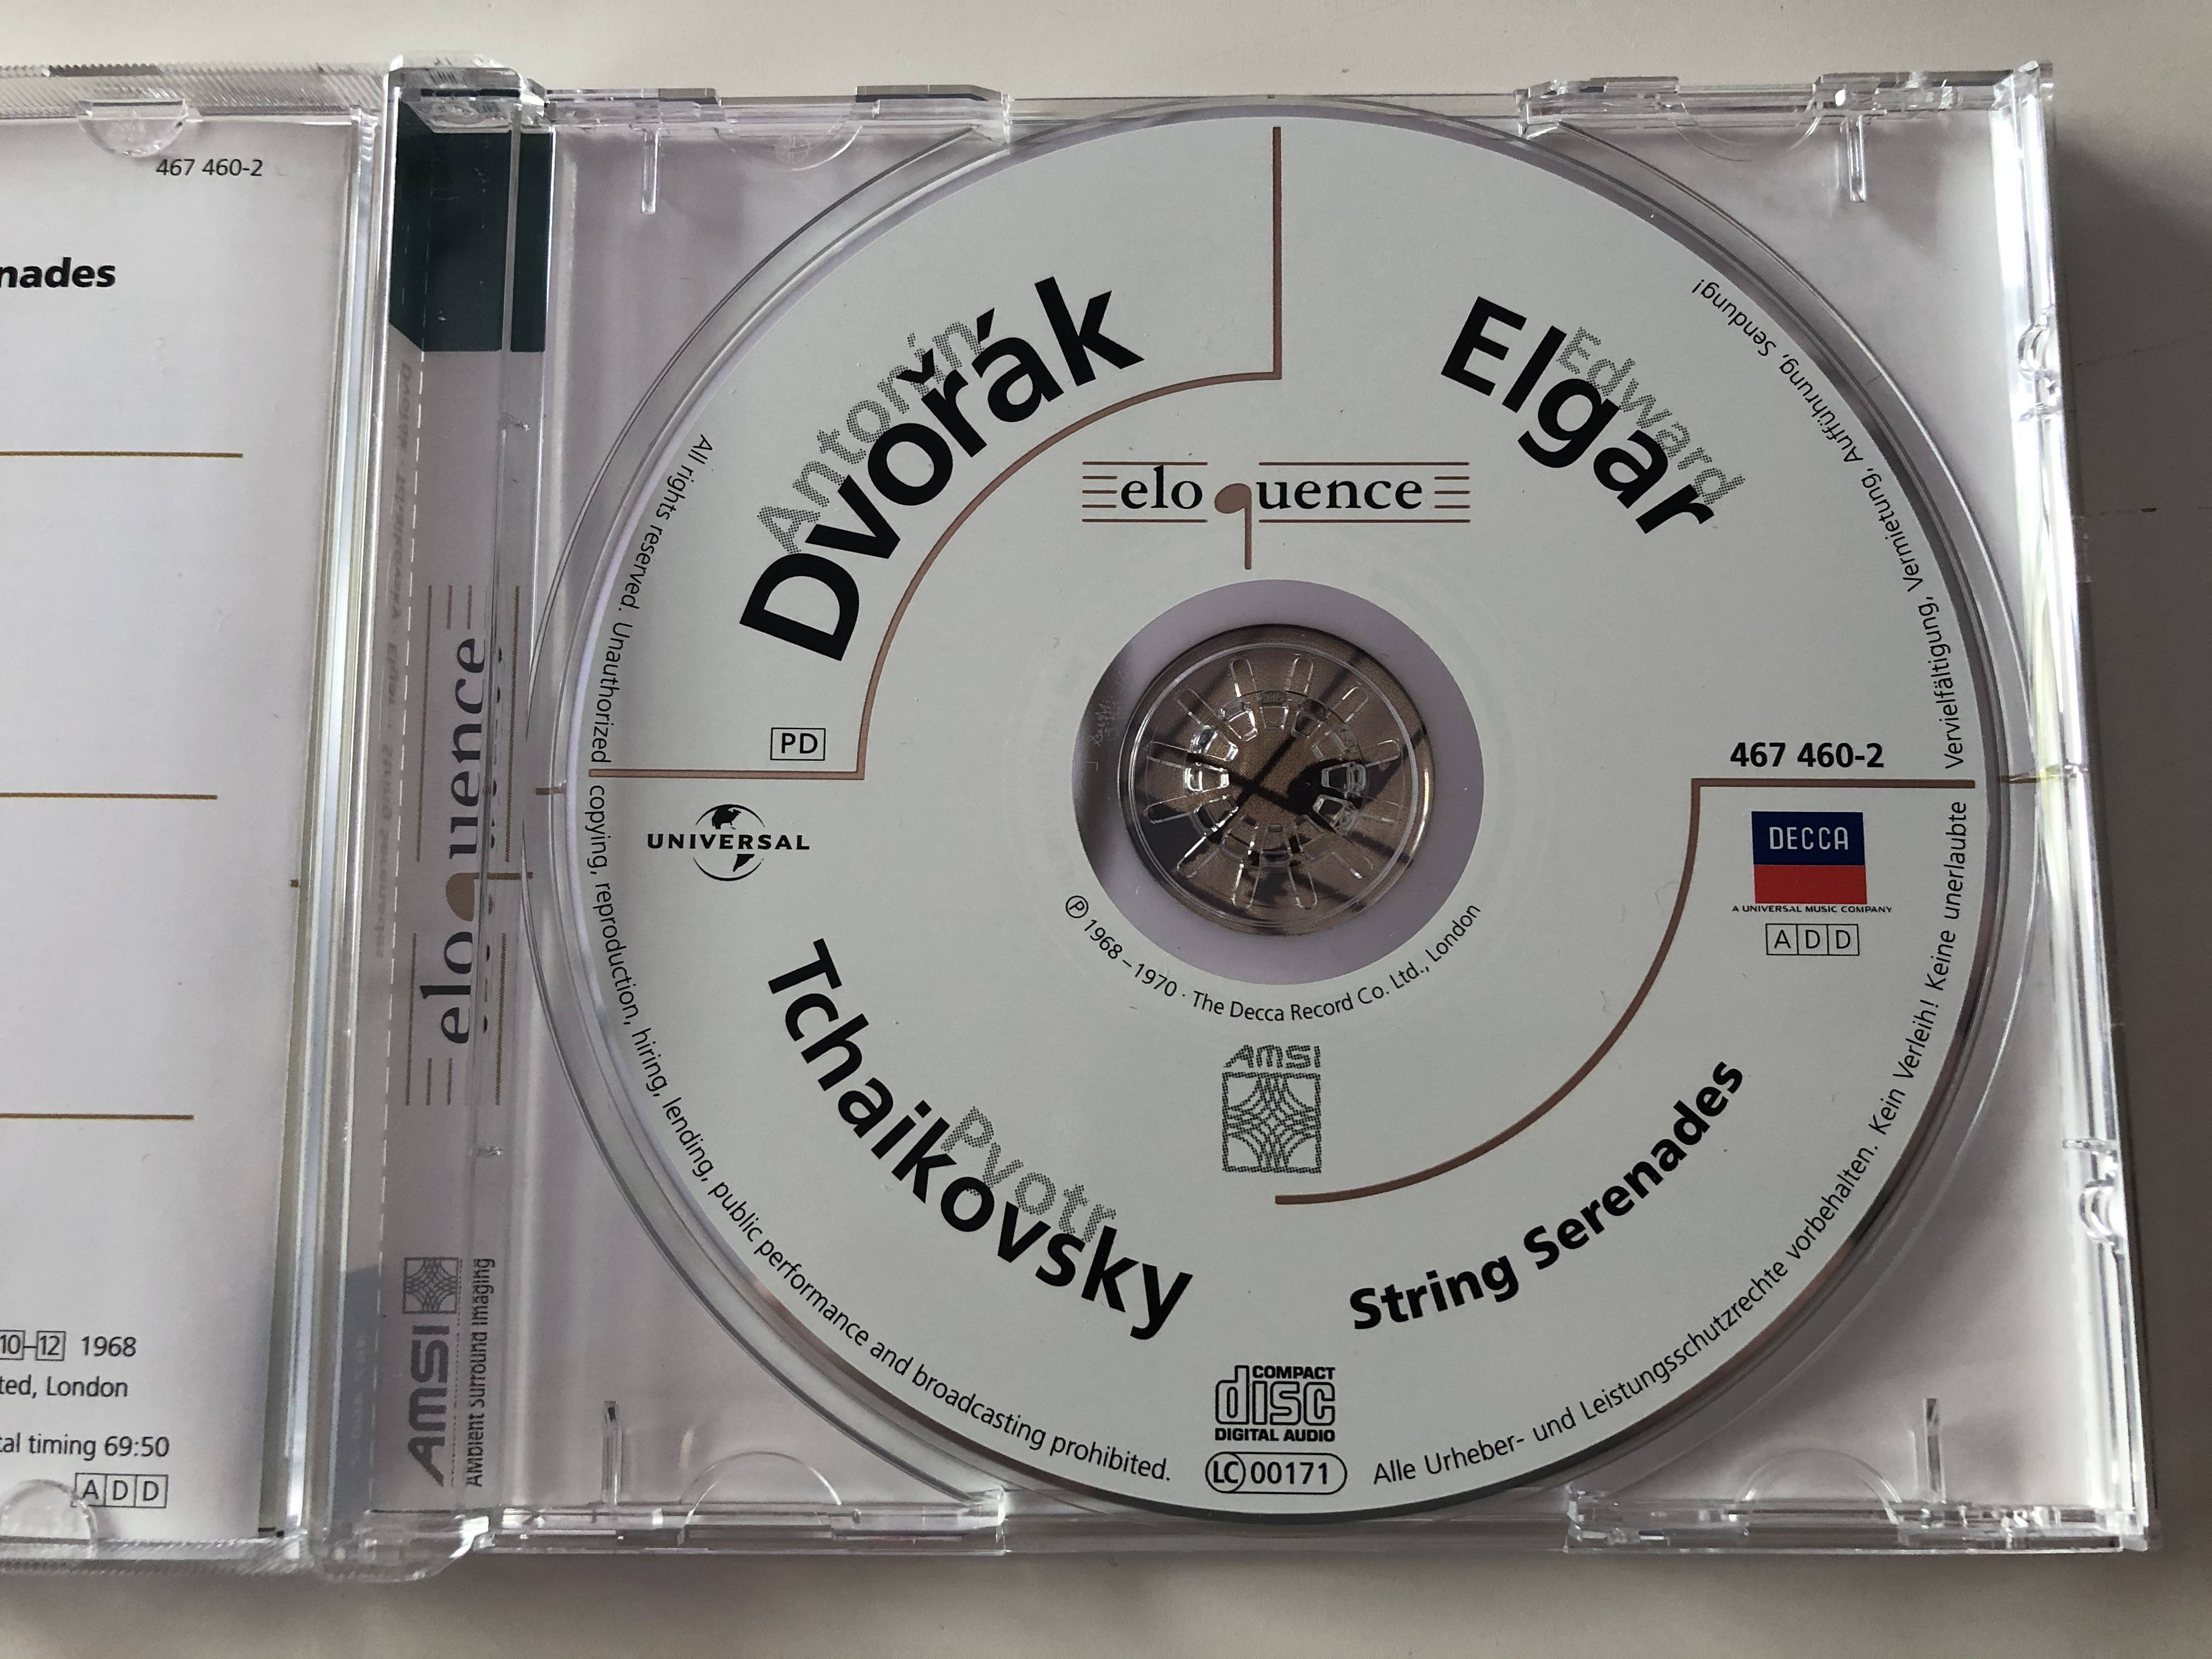 antonin-dvorak-pyotr-tchaikovsky-edward-elgar-string-serenades-academy-of-st-martin-in-the-fields-sir-neville-marriner-decca-audio-cd-467-460-2-3-.jpg